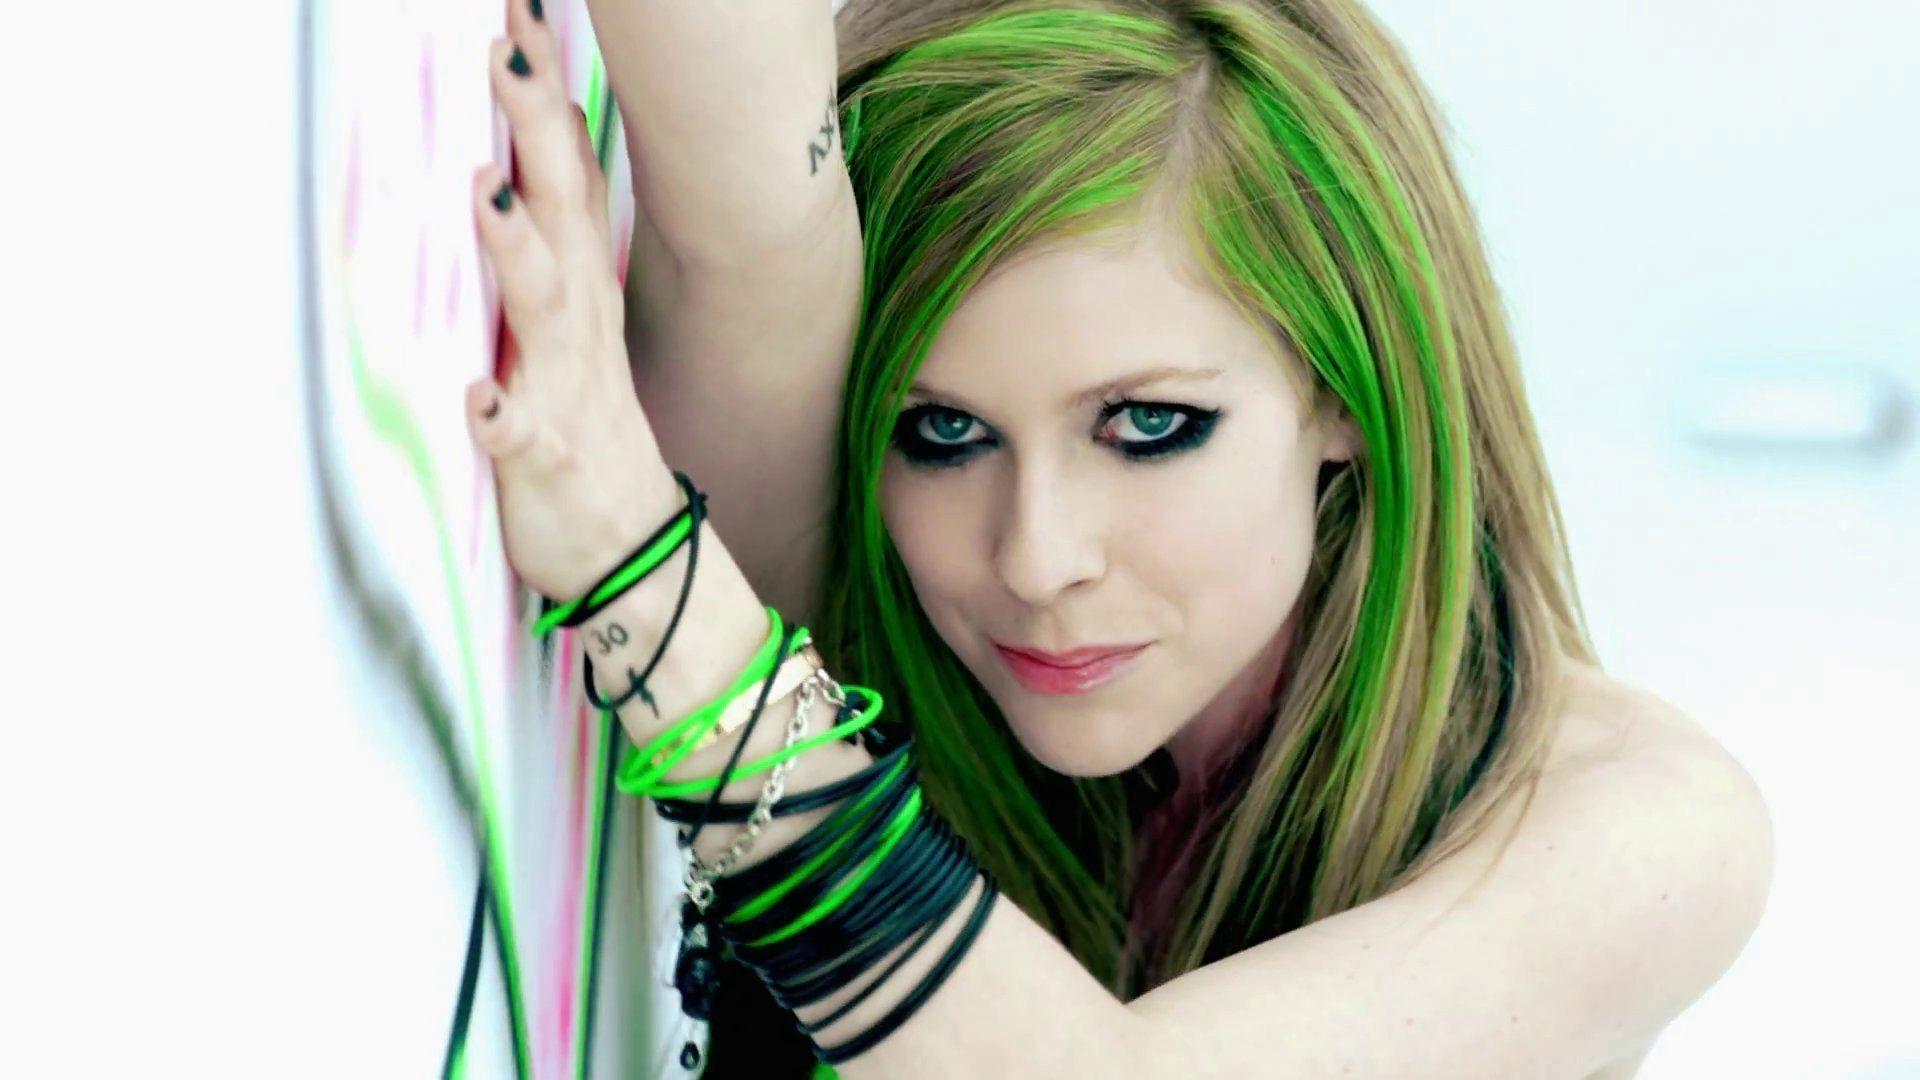 Avril Lavigne image I Smile HD wallpaper and background photo